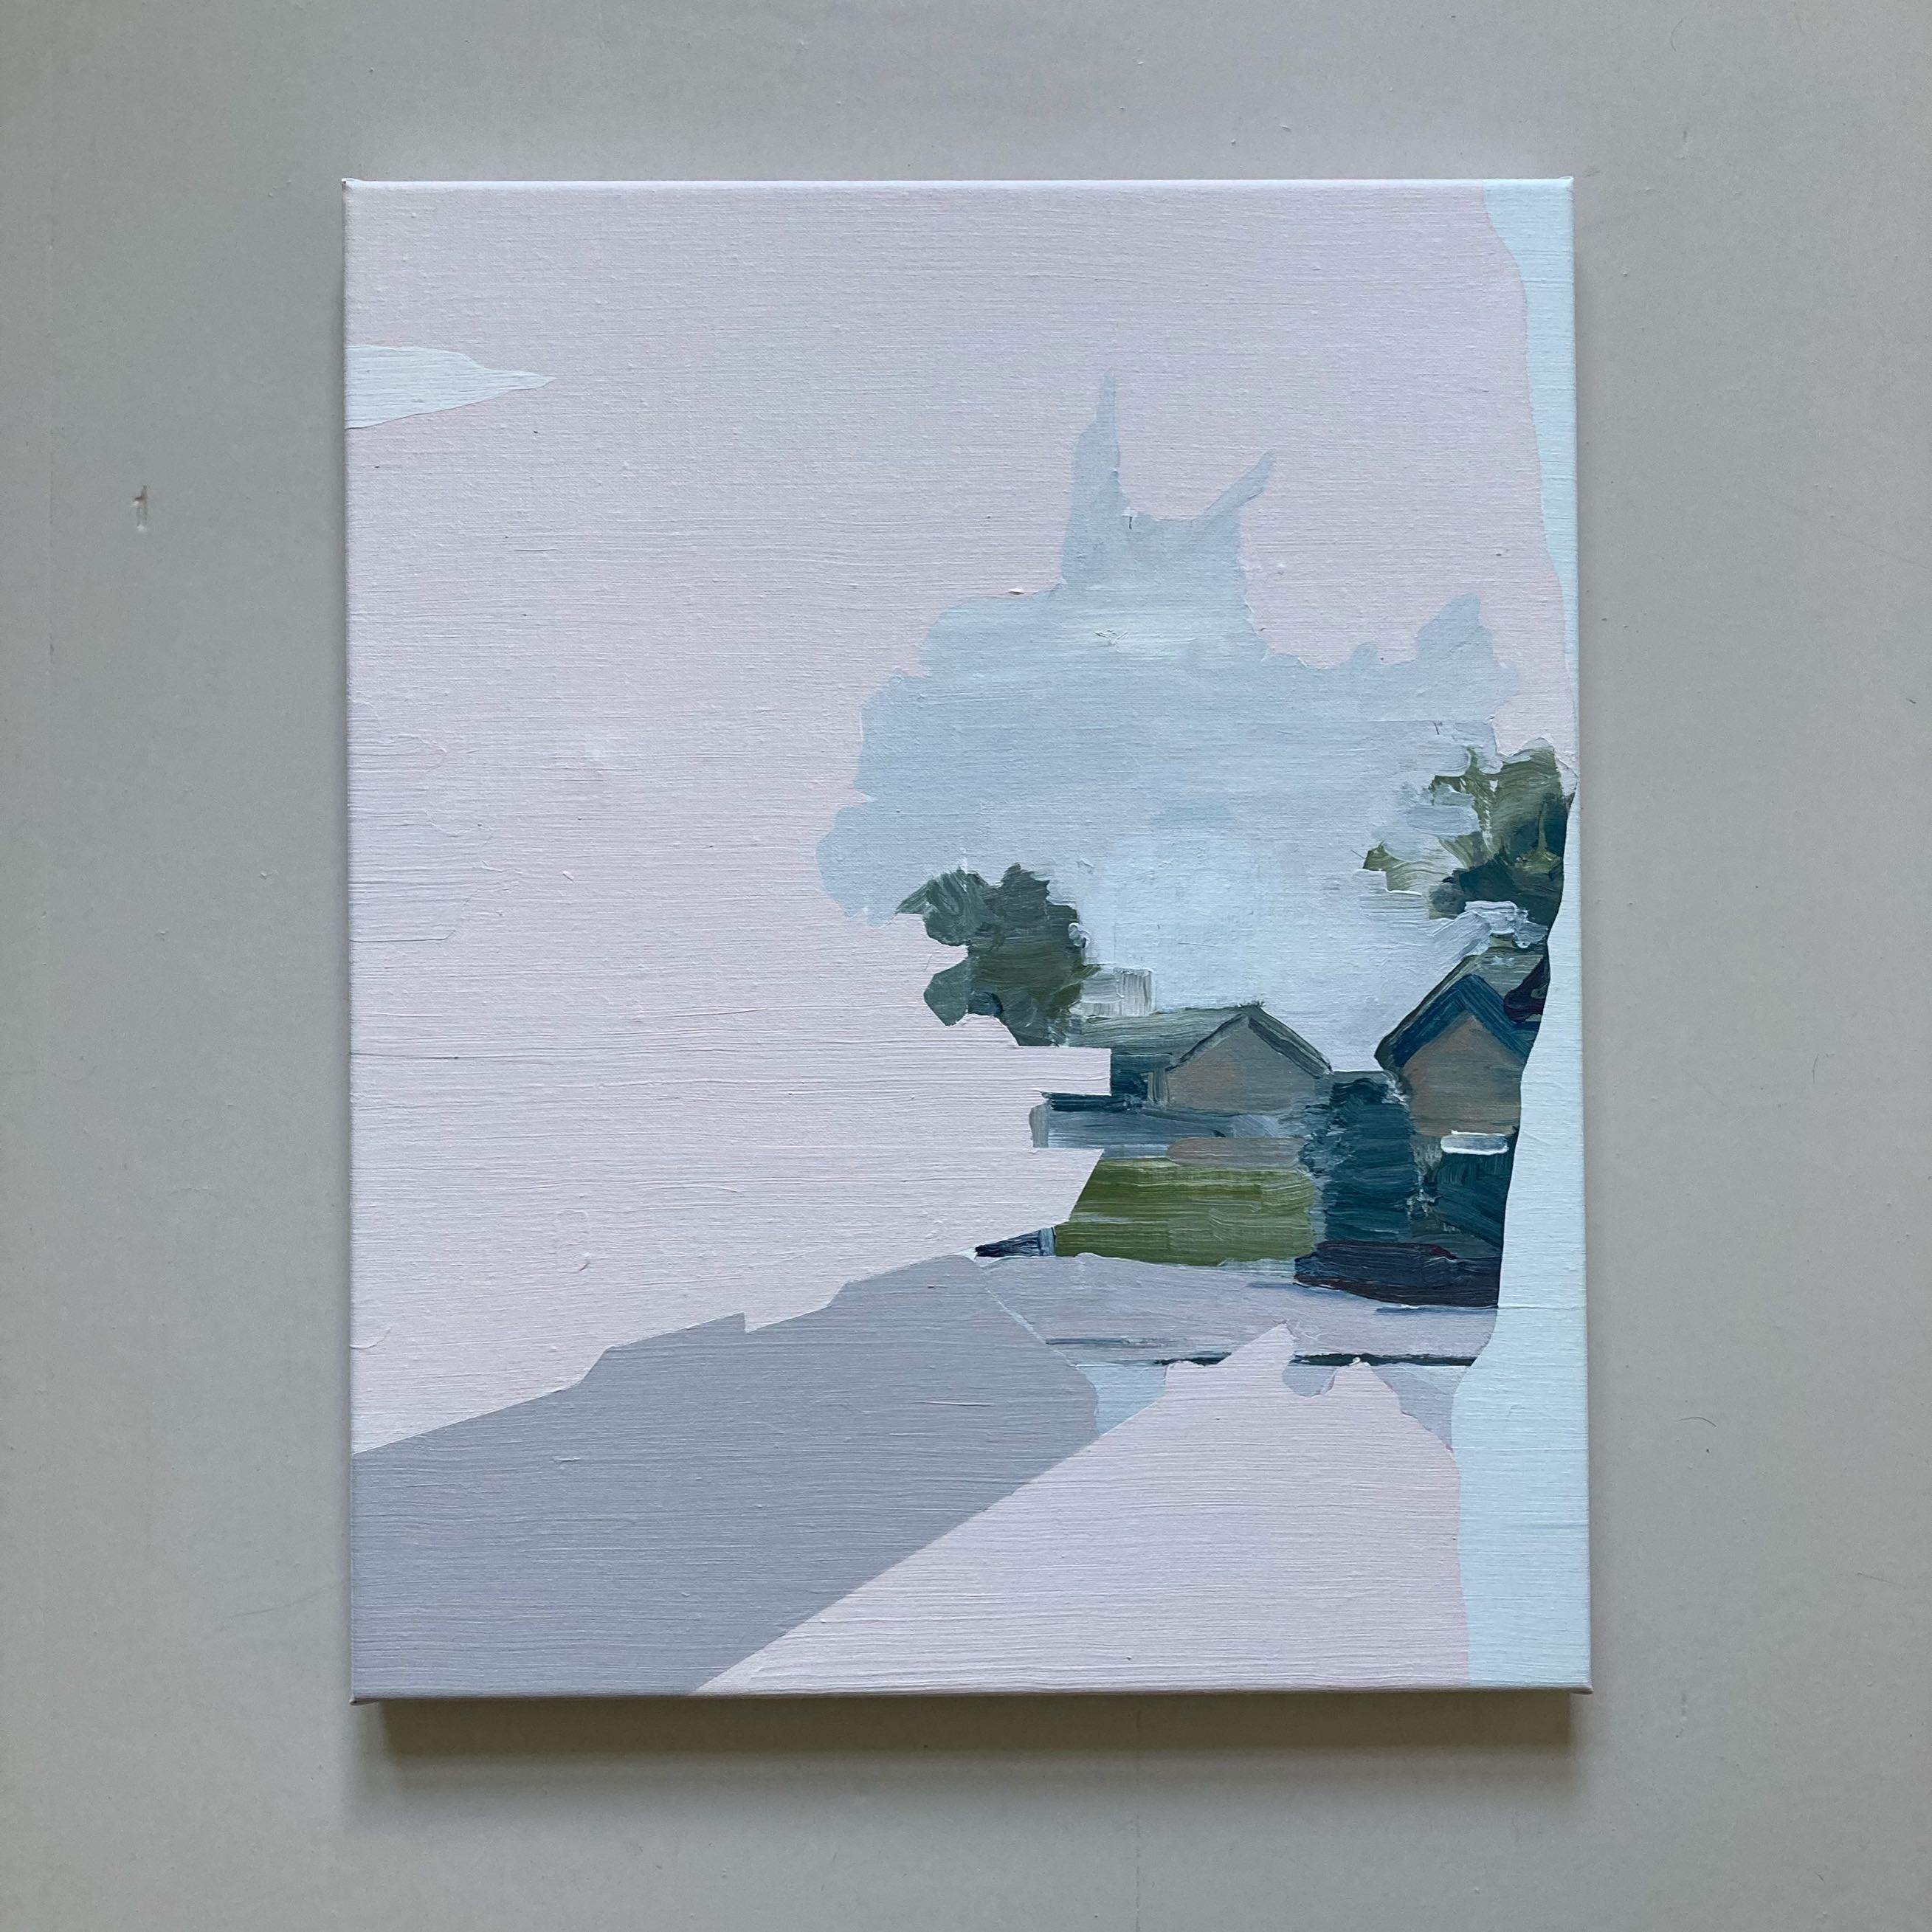 'spot', 44 x 54 cm, acrylics on canvas, 2021